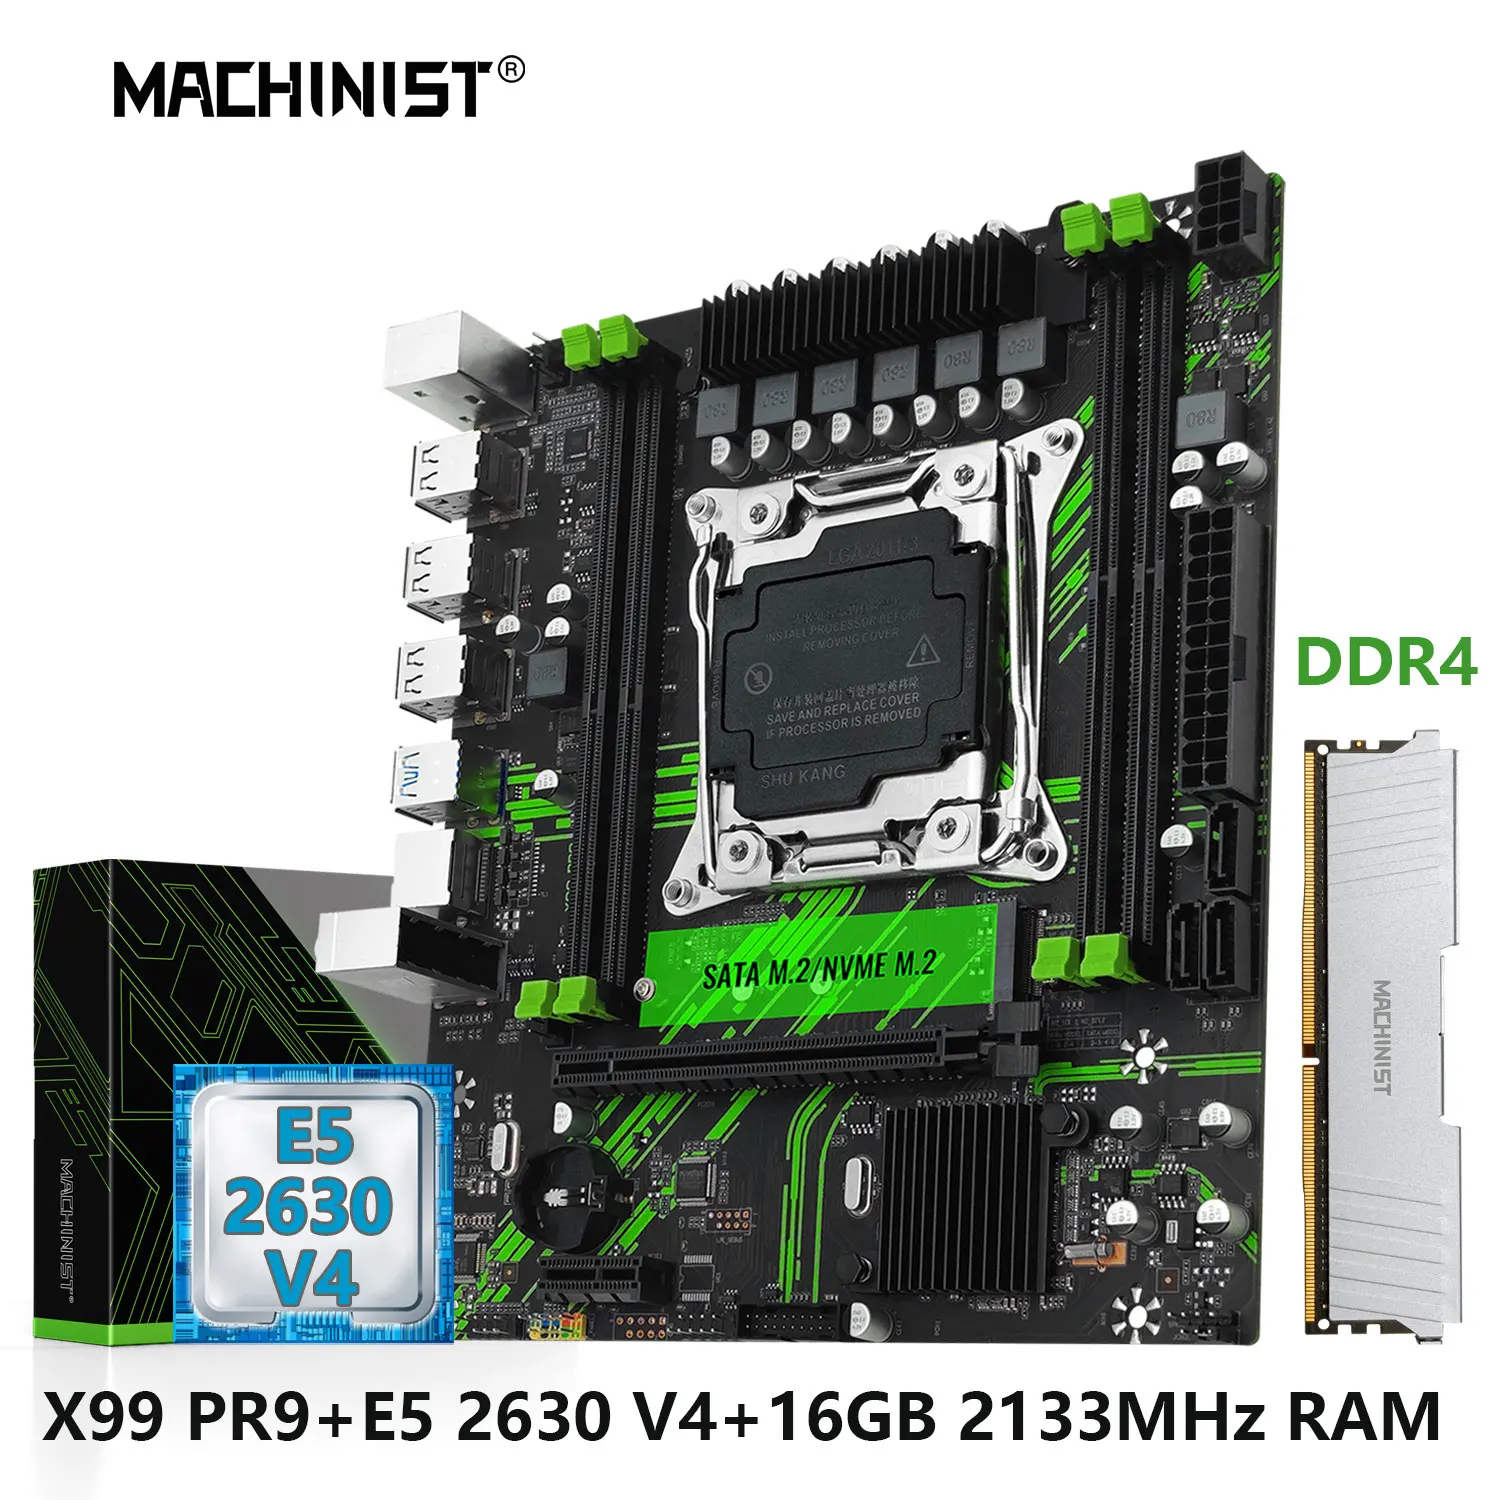 

MACHINIST X99 PR9 Motherboard Set Kit LGA 2011-3 Xeon CPU E5 2630 V4 Processor DDR4 ECC 16GB RAM Memory NVME/SATA M.2 usb M-ATX